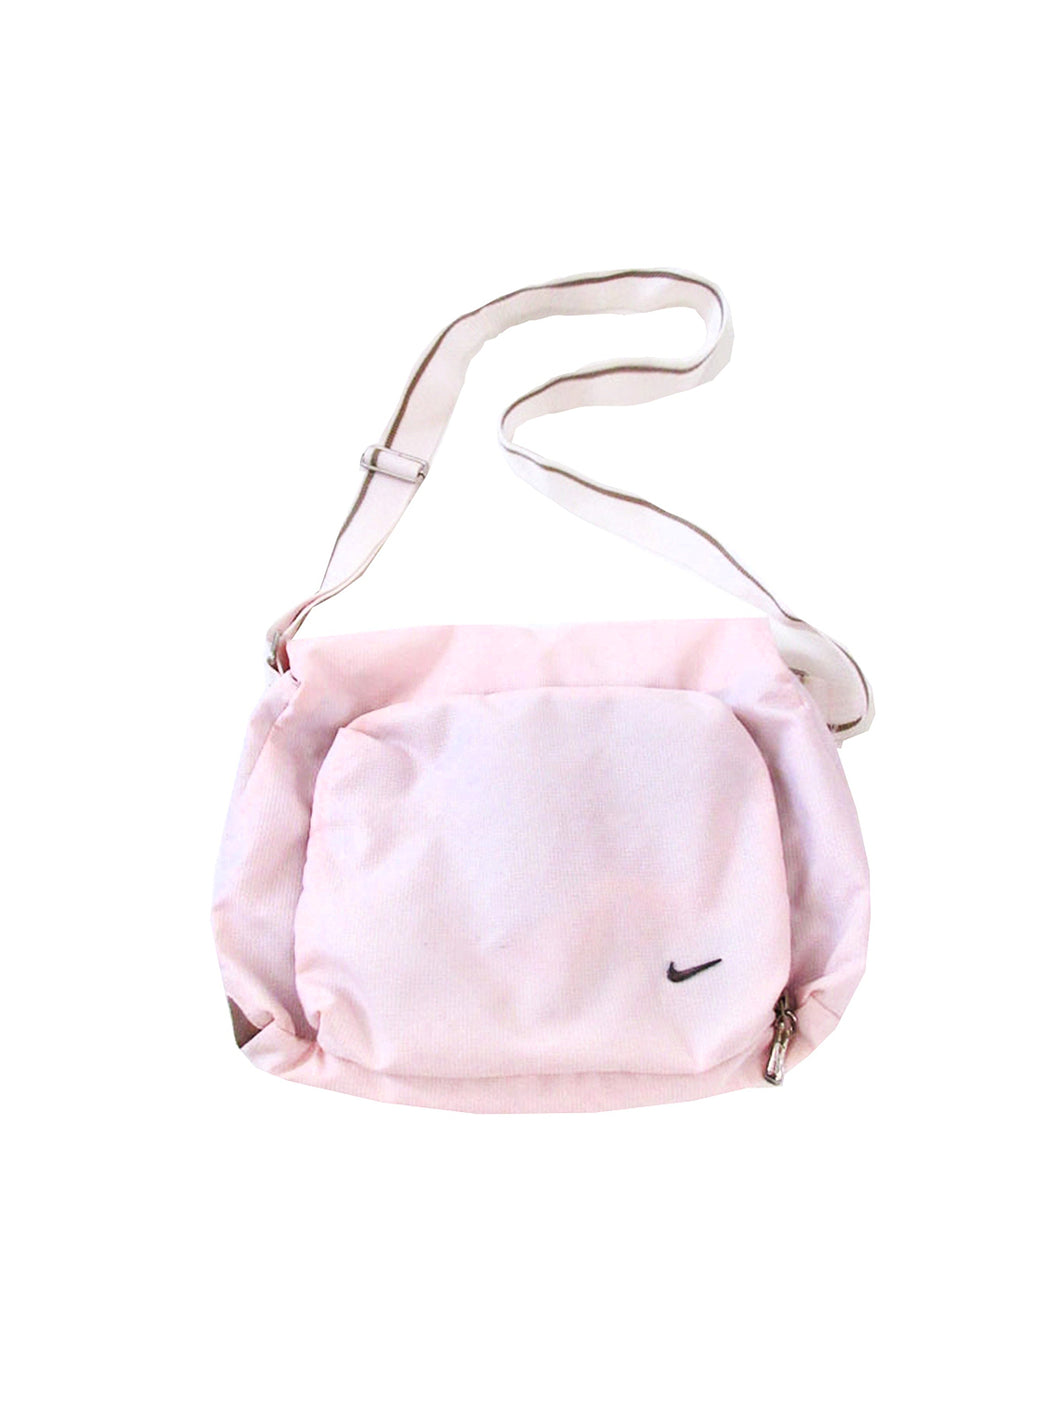 Nike Vintage Nylon Pink Messenger